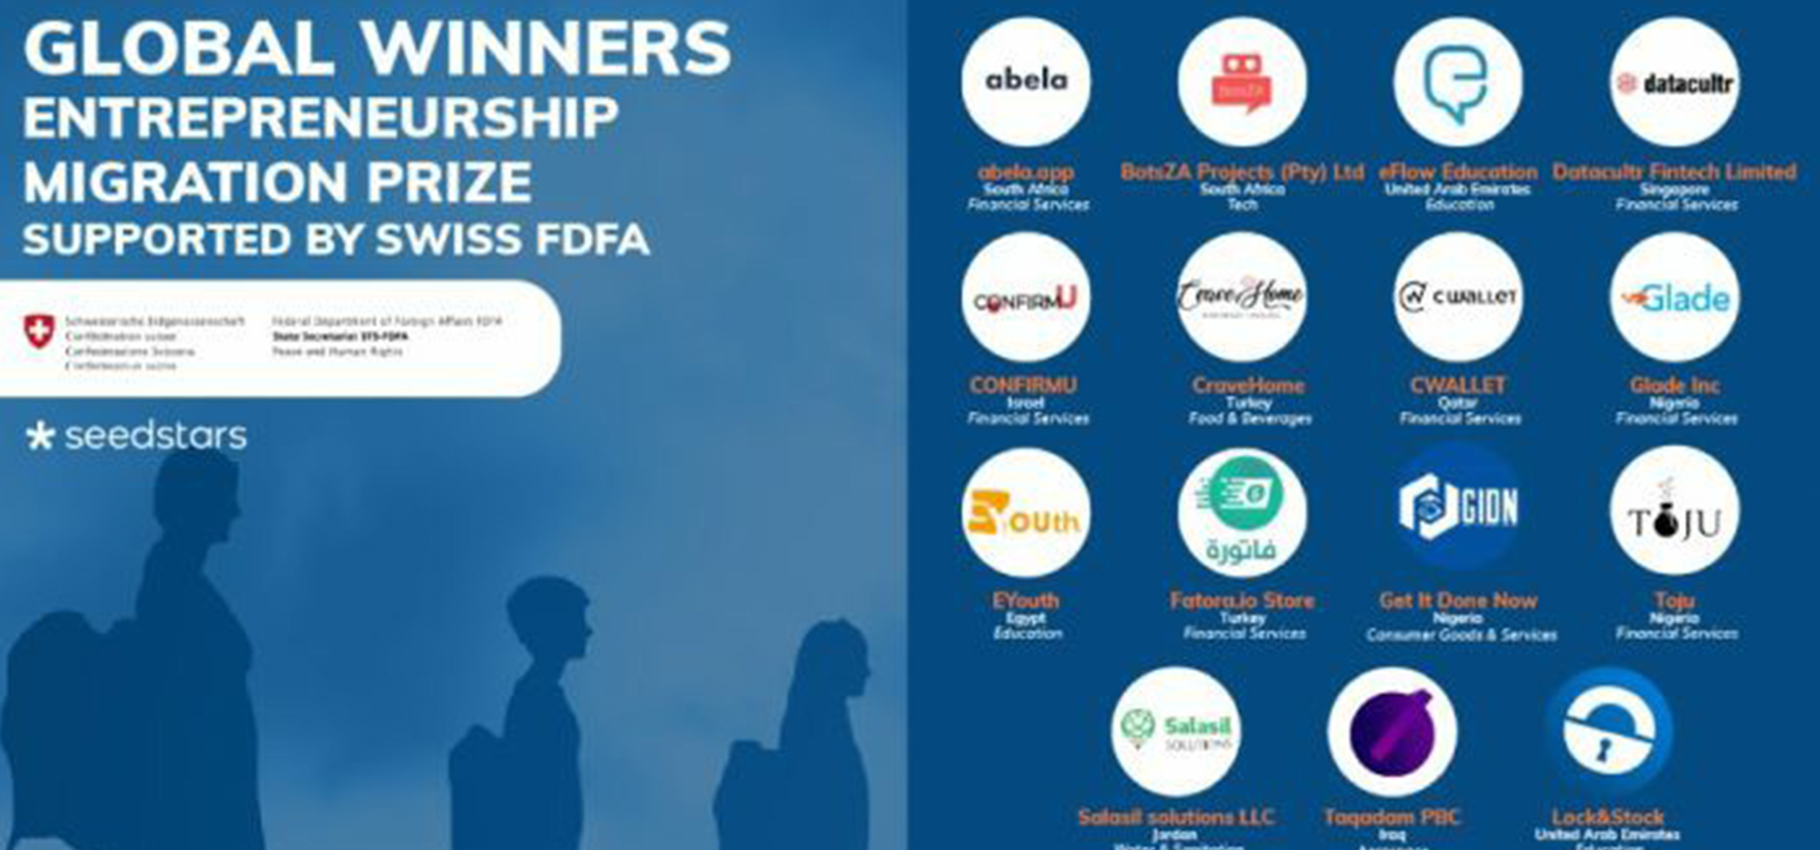 African startups named winners of migration entrepreneurship prize 2022